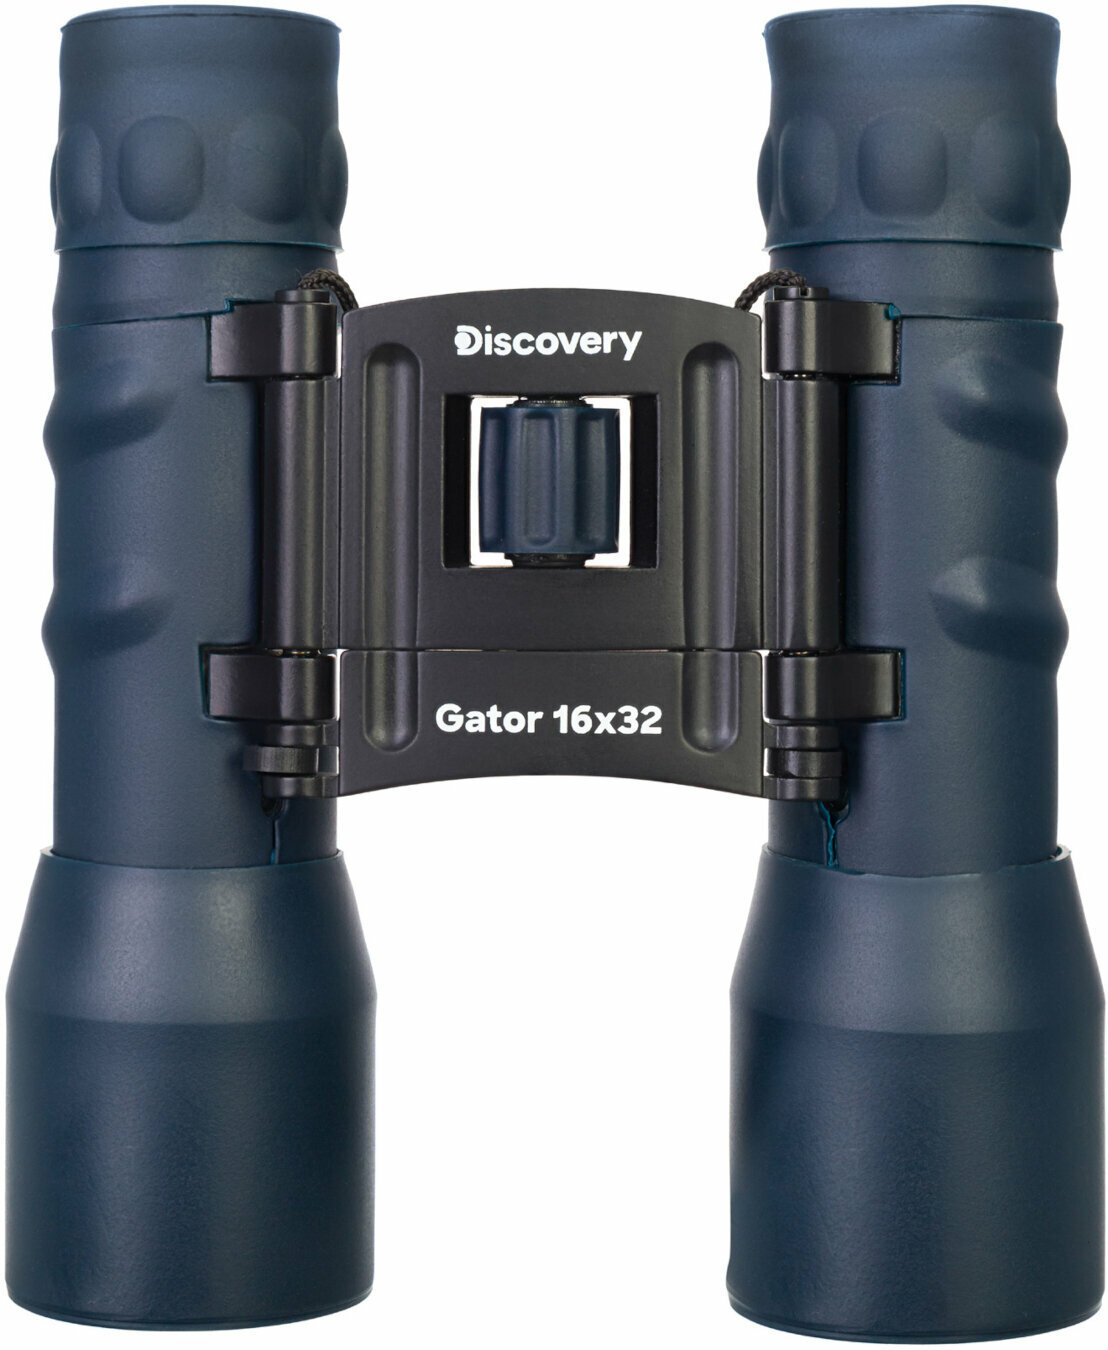 Fernglas Discovery Gator 16x32 Binoculars